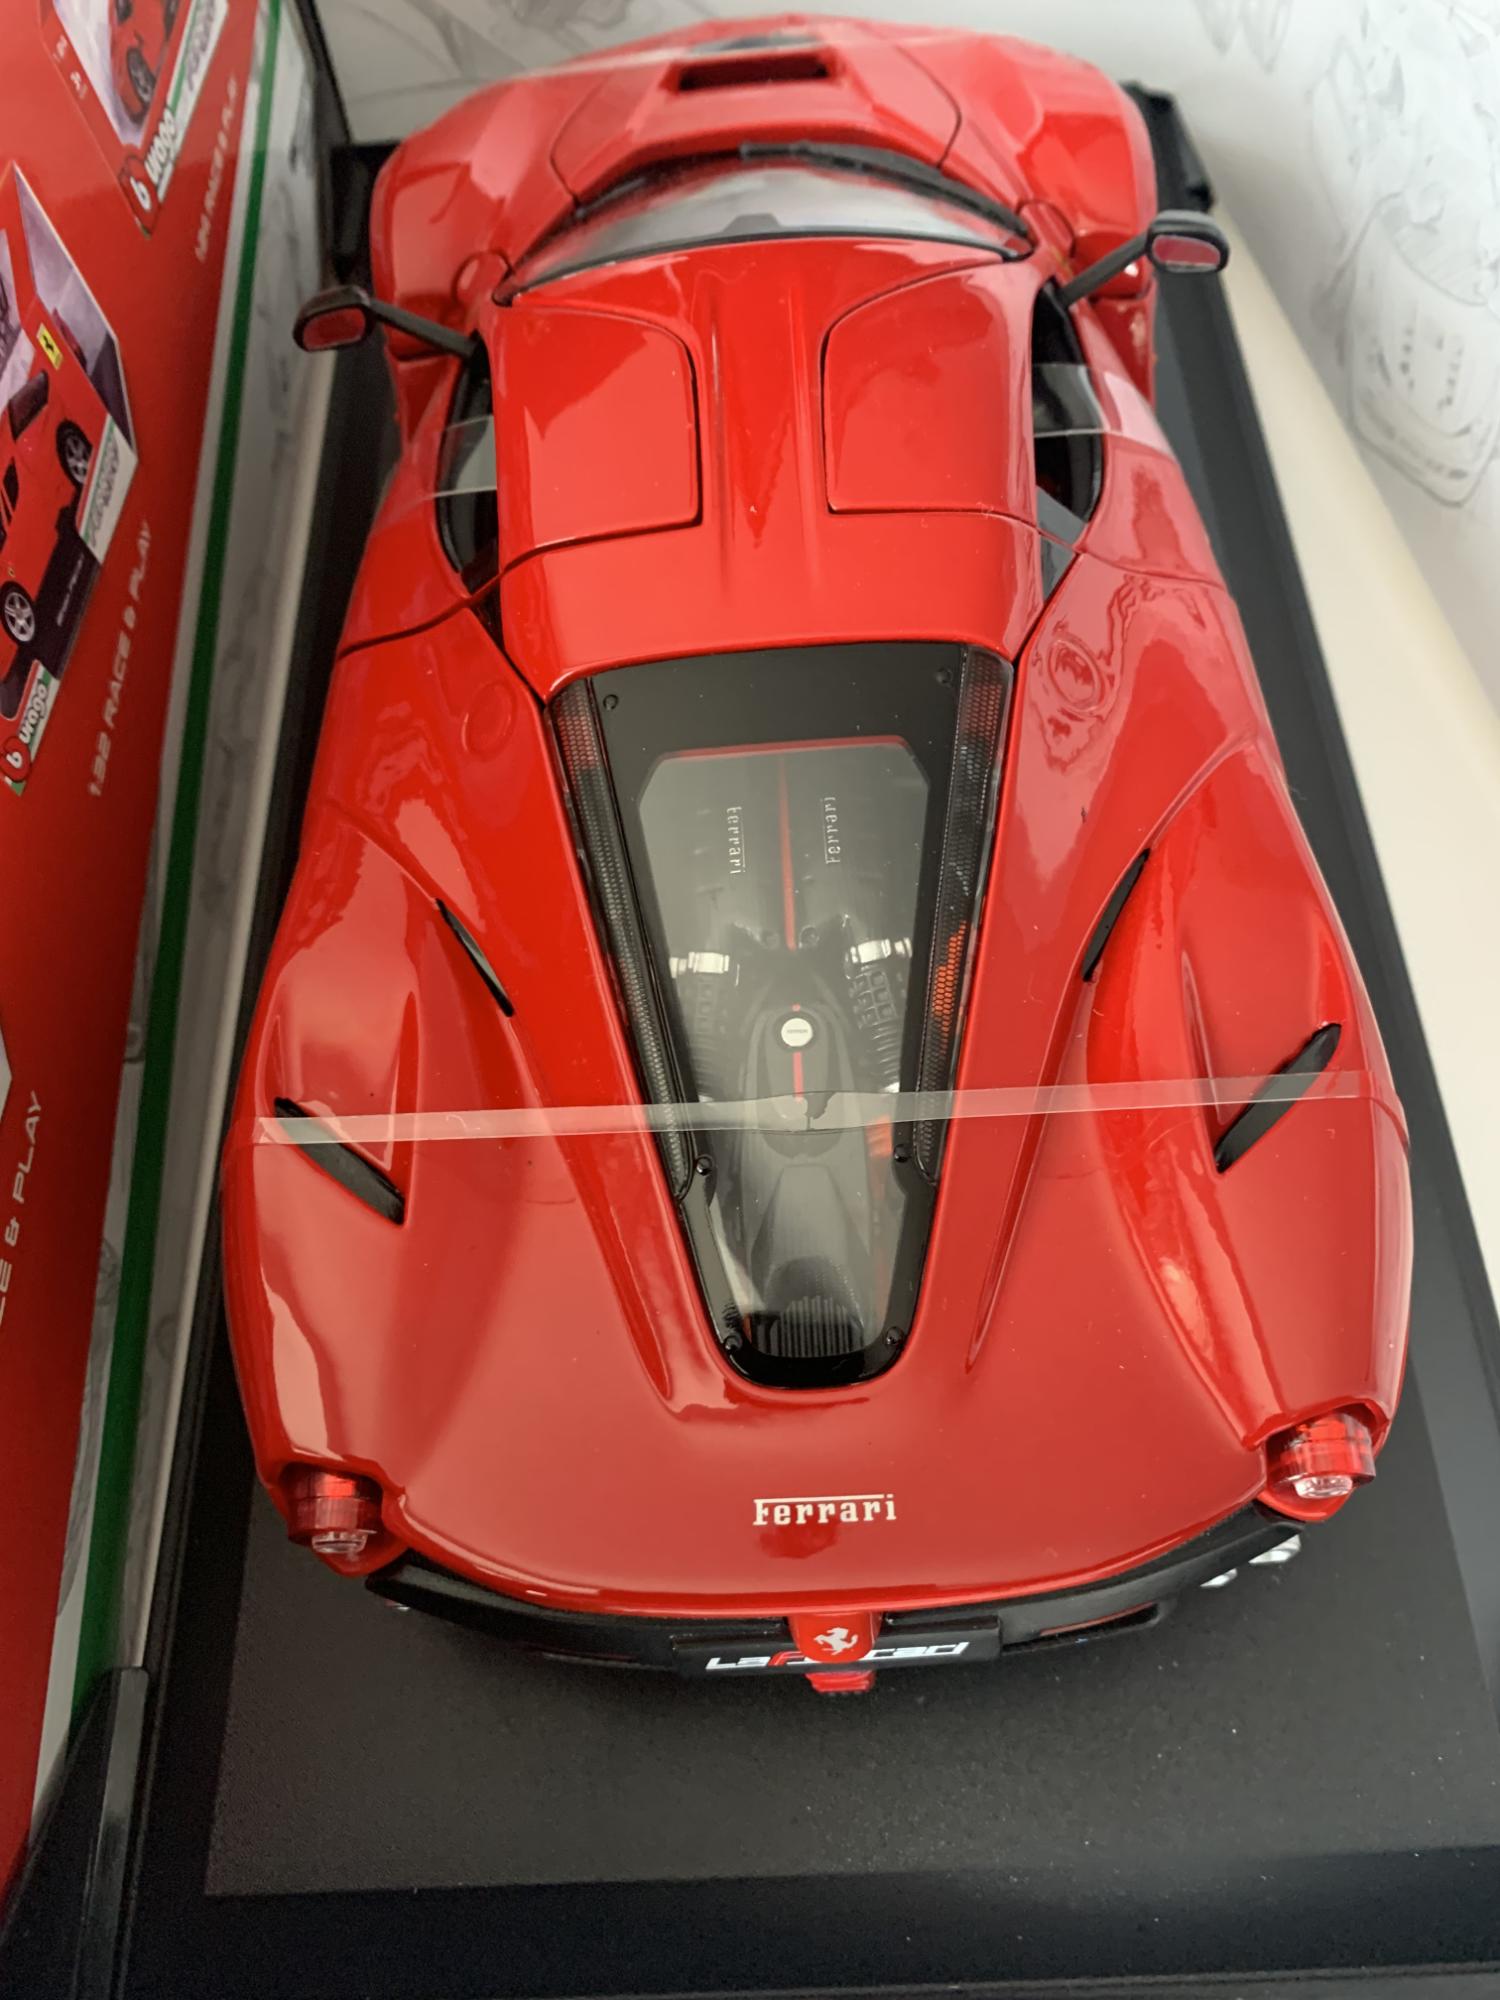 A very good representation of the Ferrari La Ferrari decorated in red with black Wheels